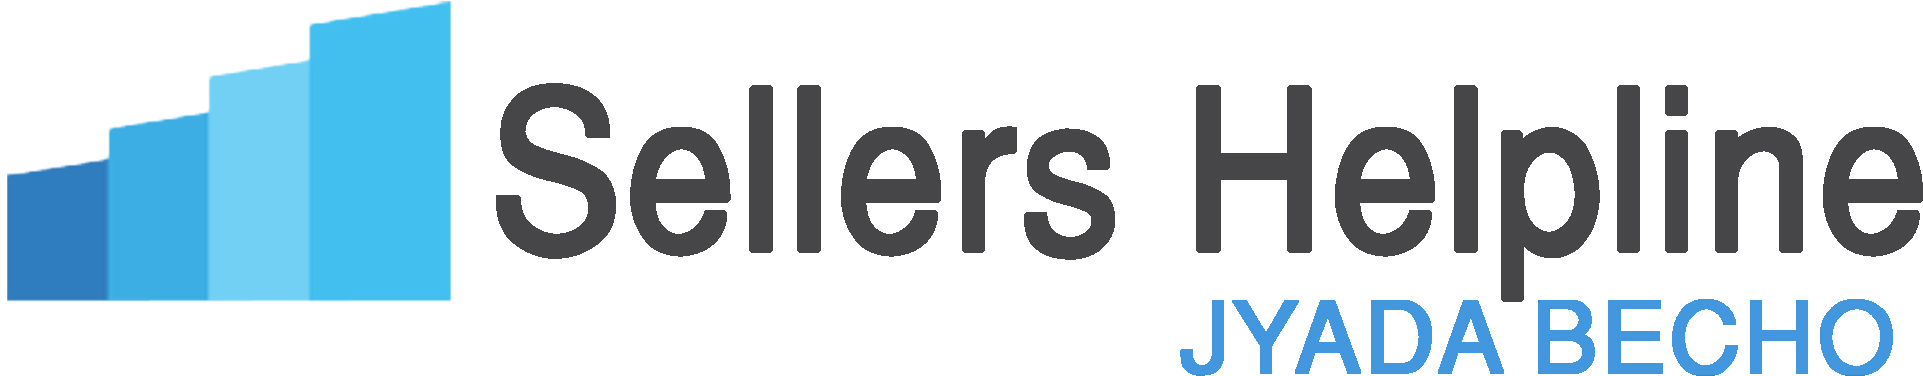 Sellers Helpline Online Sales And Services